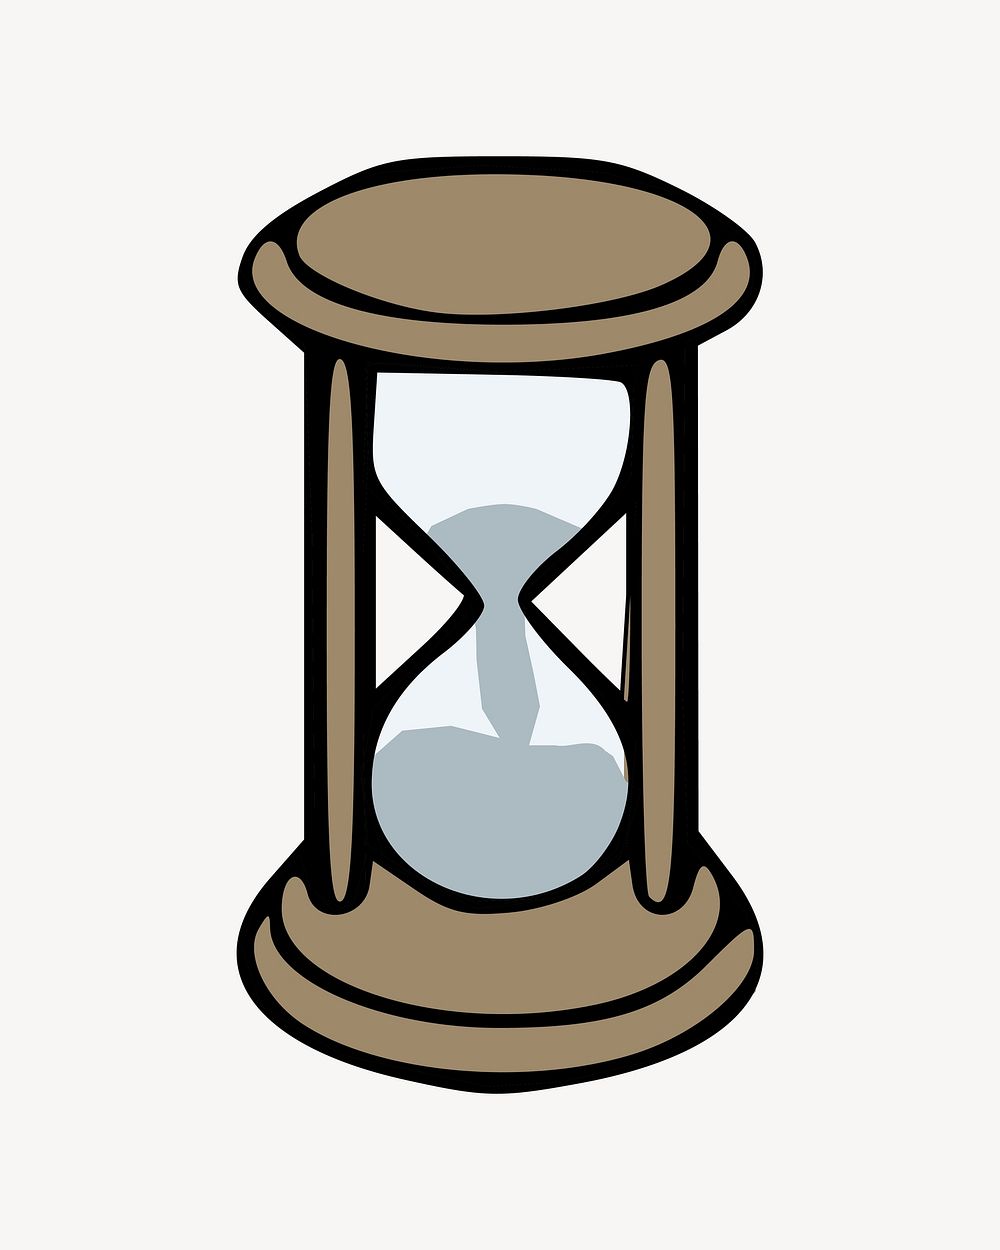 Hourglass clip art vector. Free public domain CC0 image.